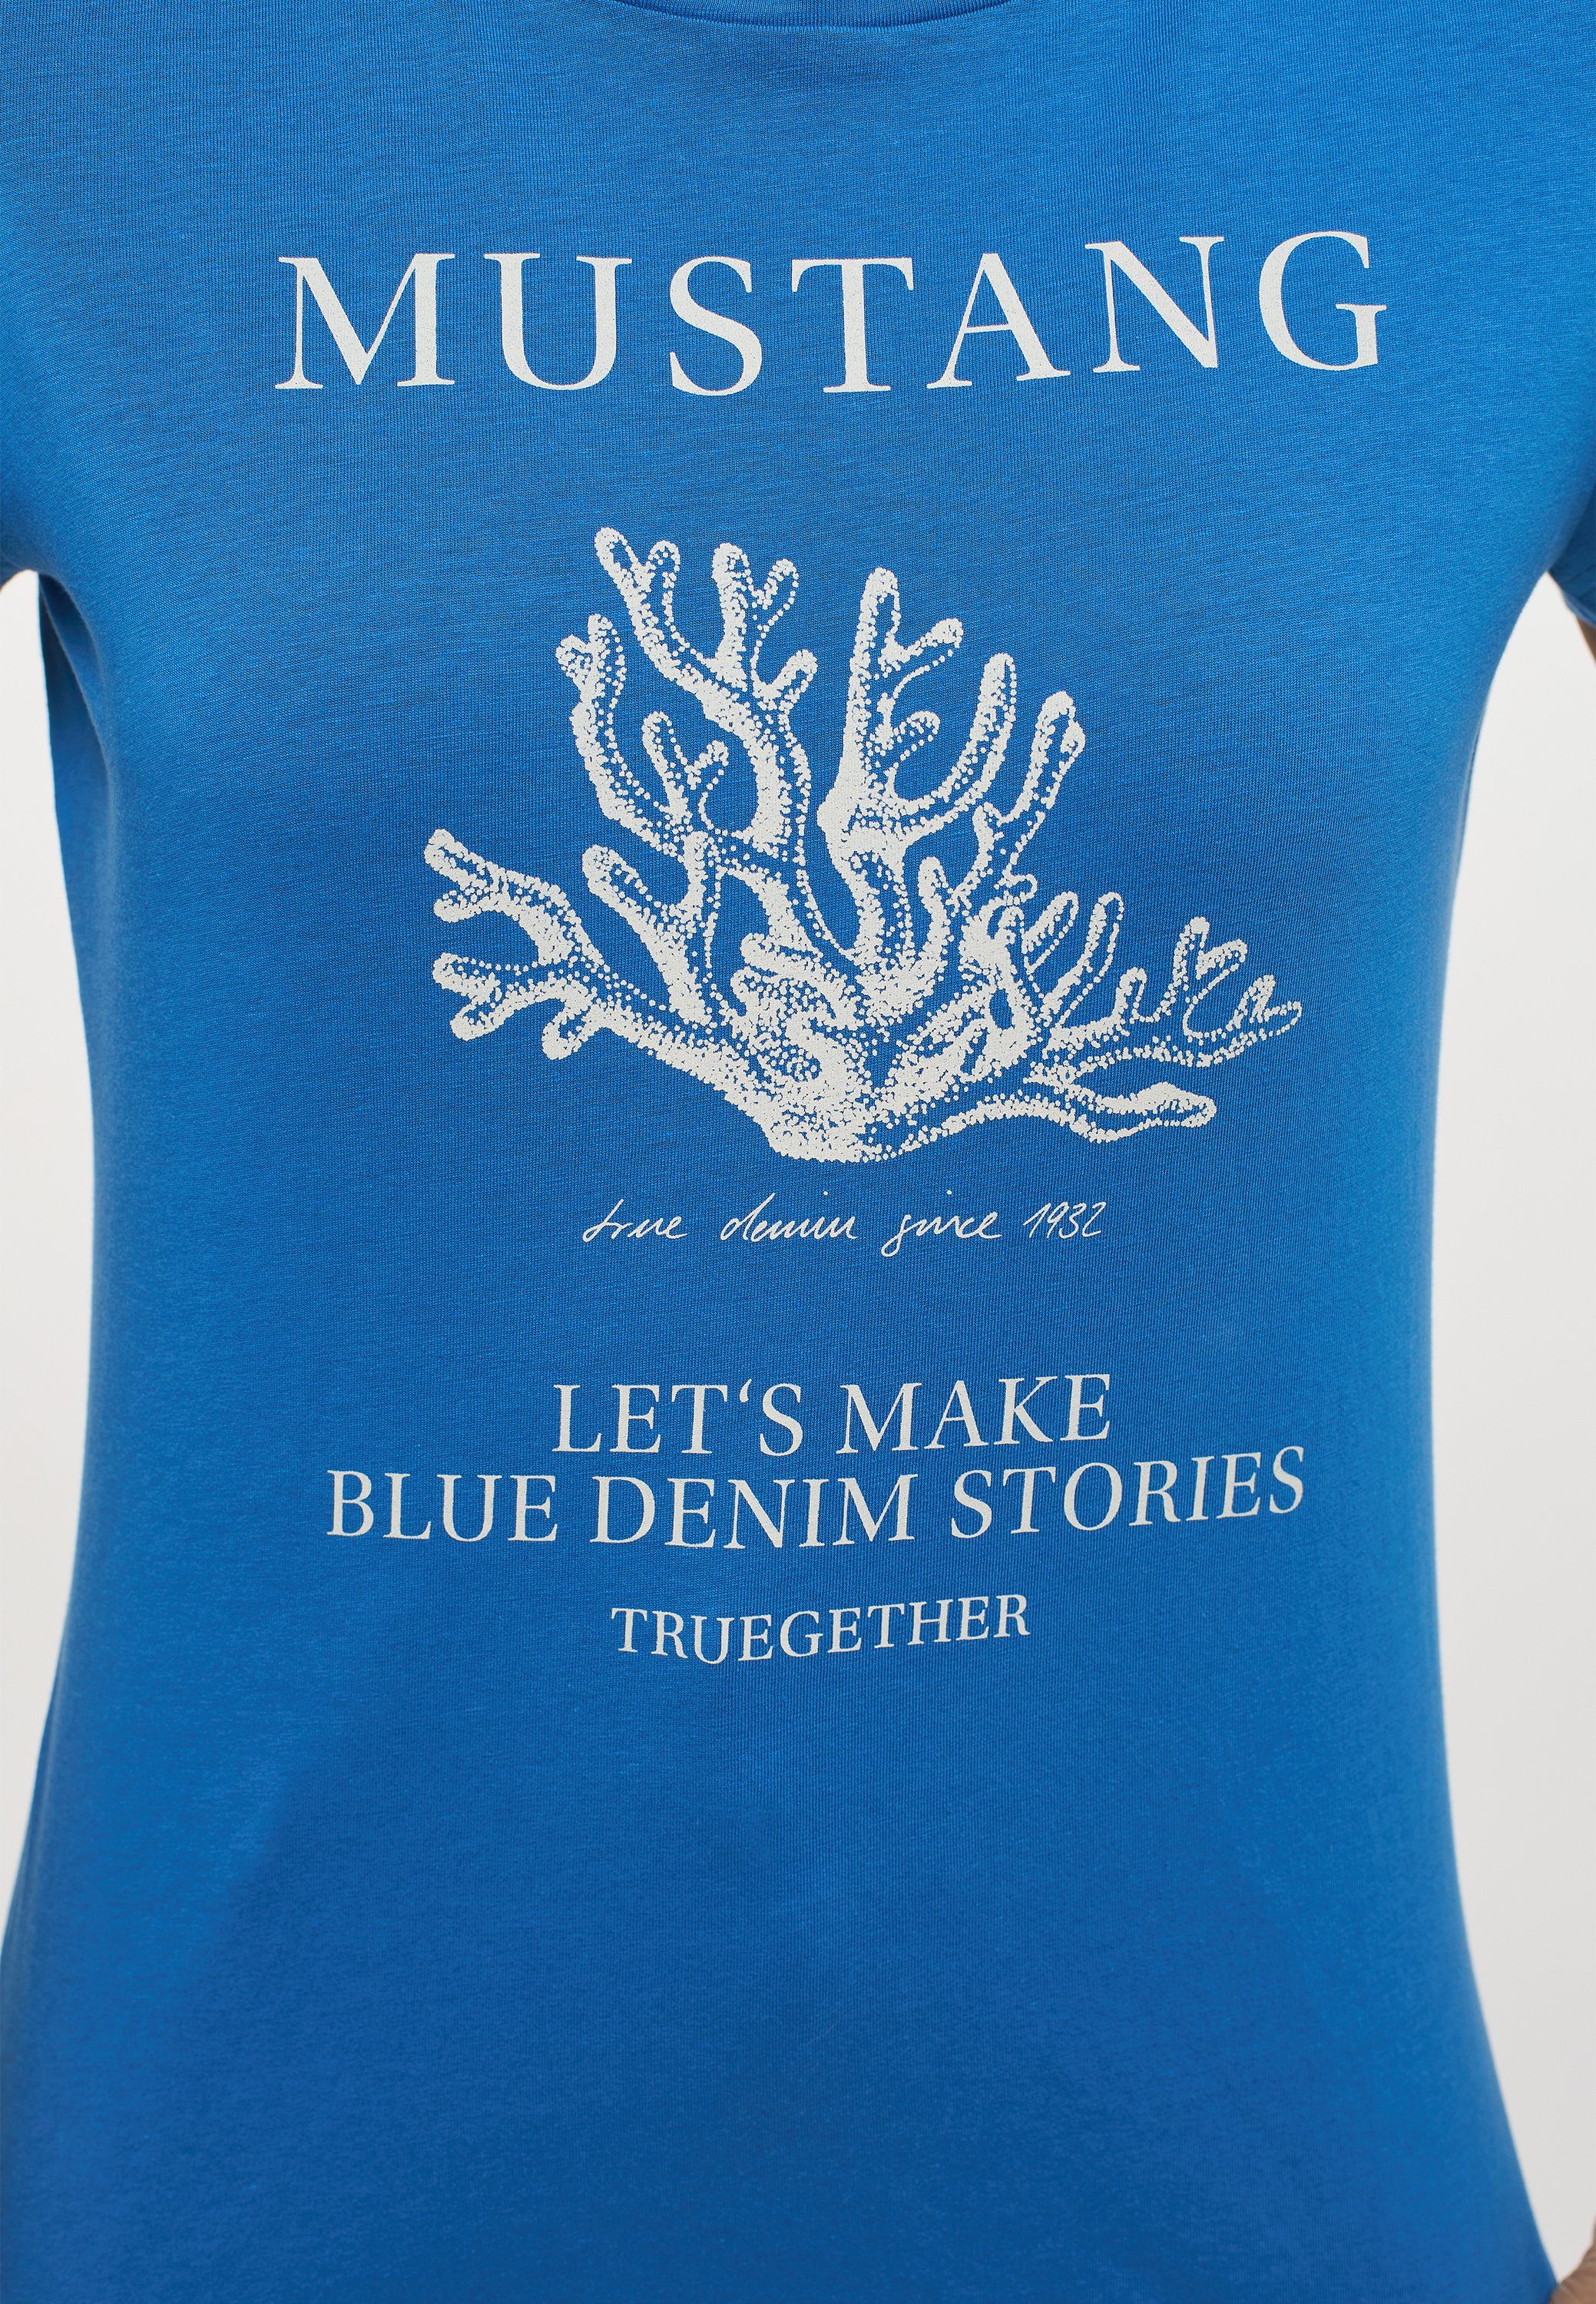 Mustang Print-Shirt blau MUSTANG T-Shirt Kurzarmshirt